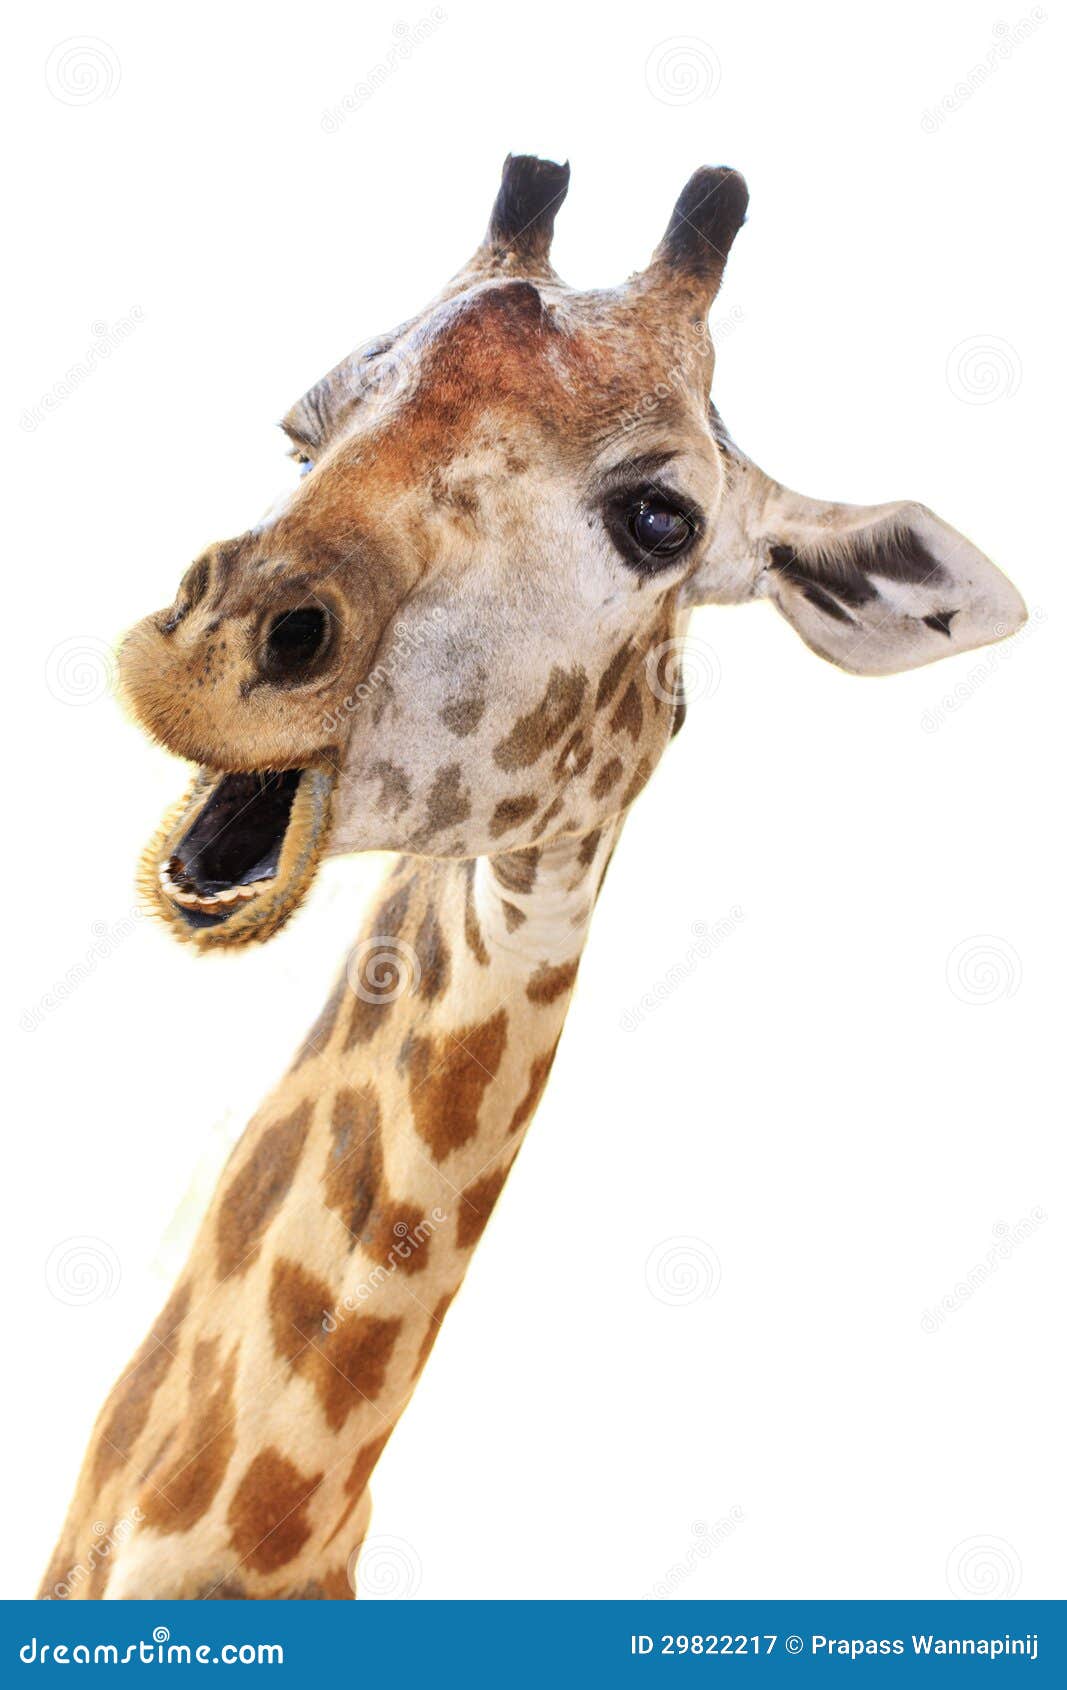 giraffe head face look funny